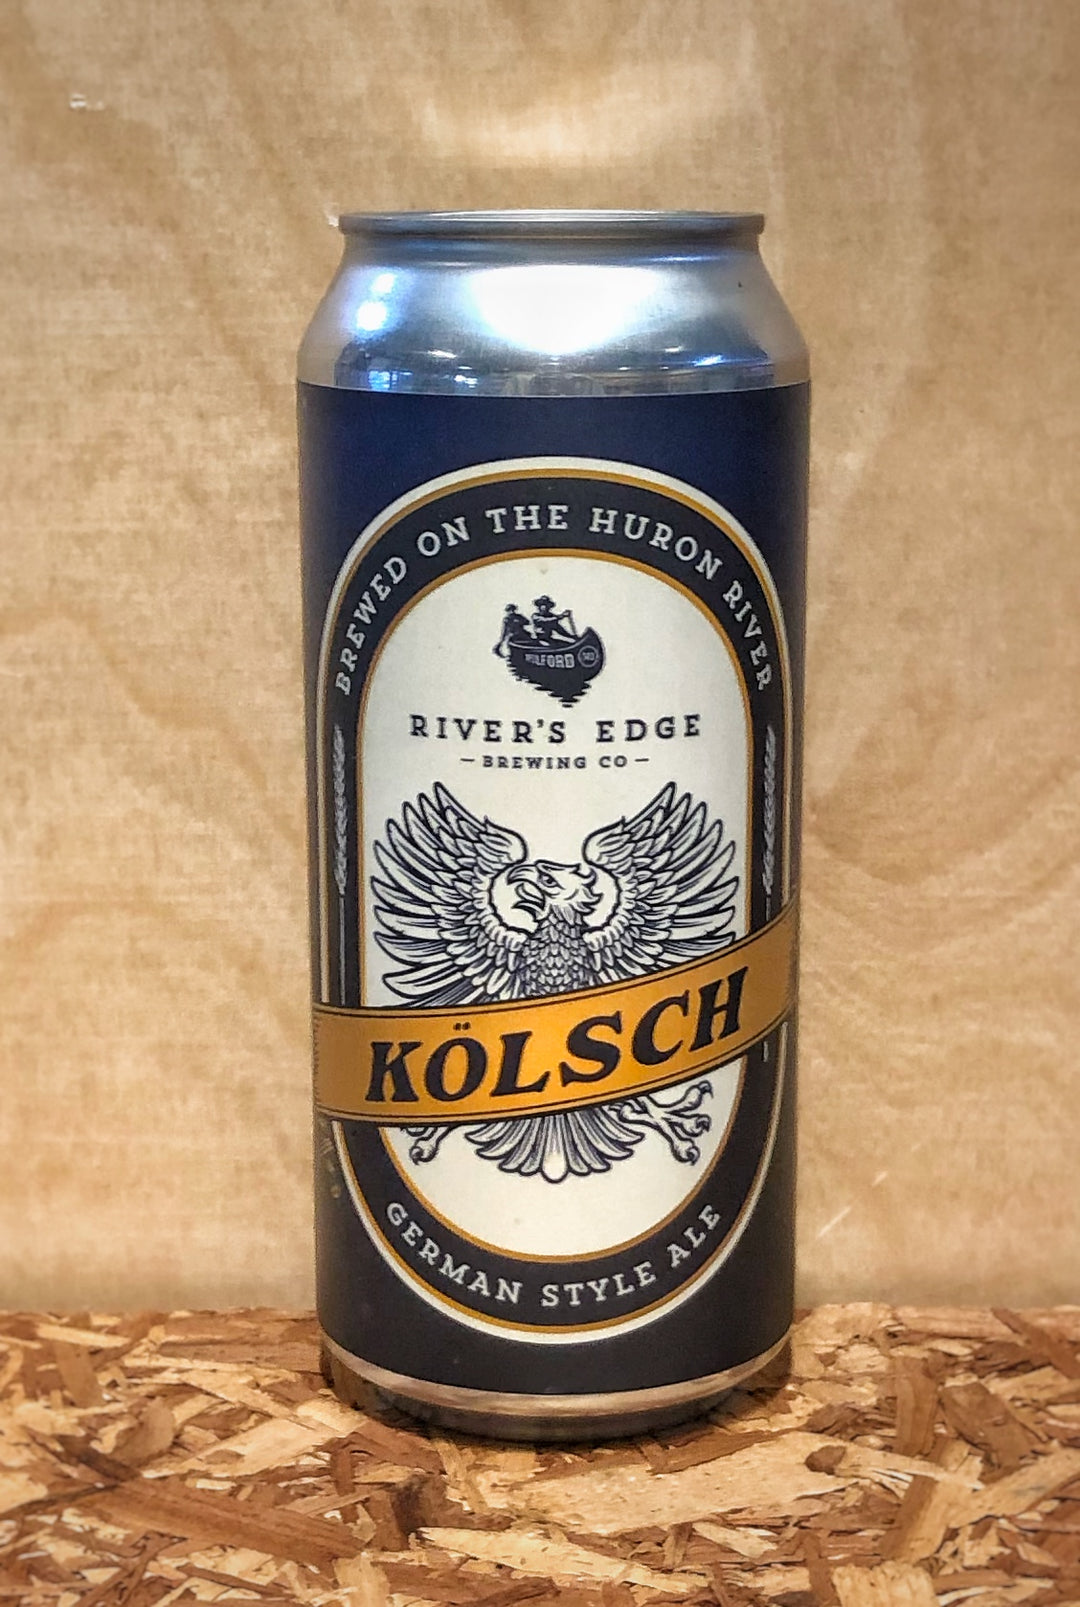 River's Edge Brewing Co. Kolsch German Style Ale (Milford, MI)